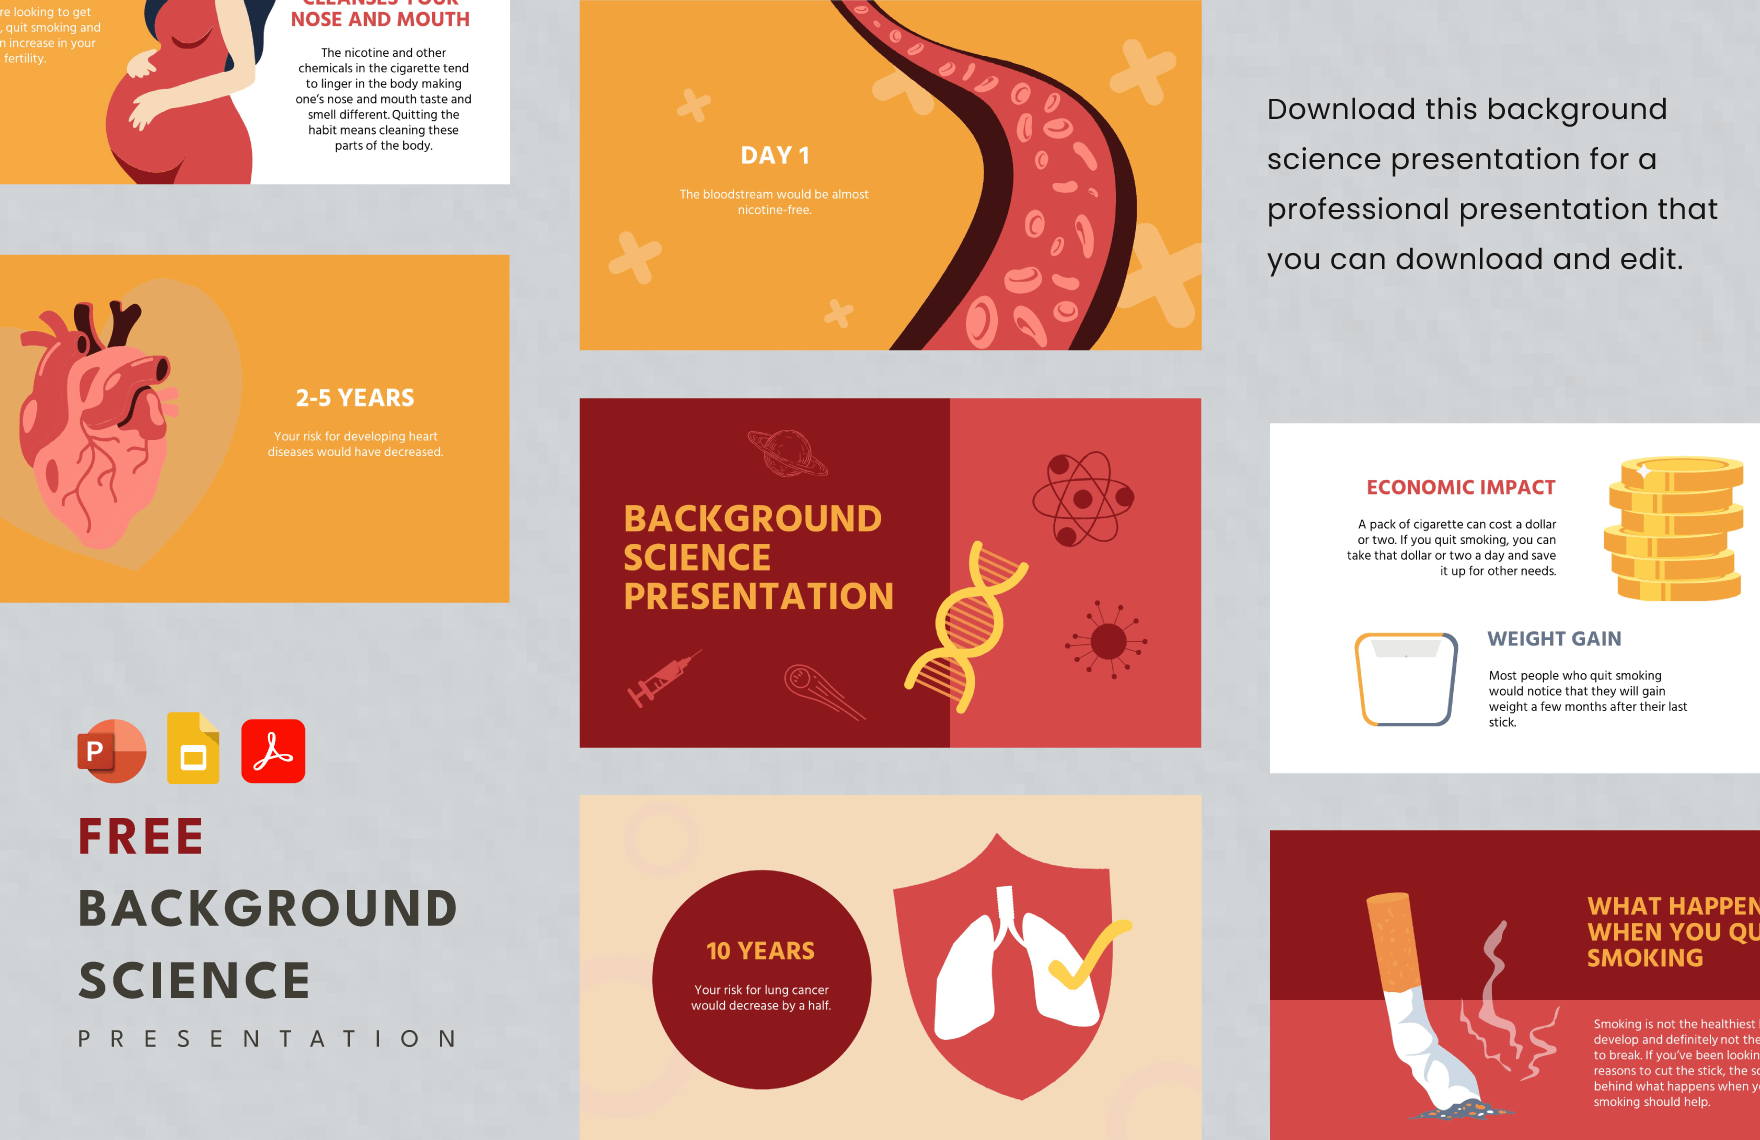 Free Background Science Presentation